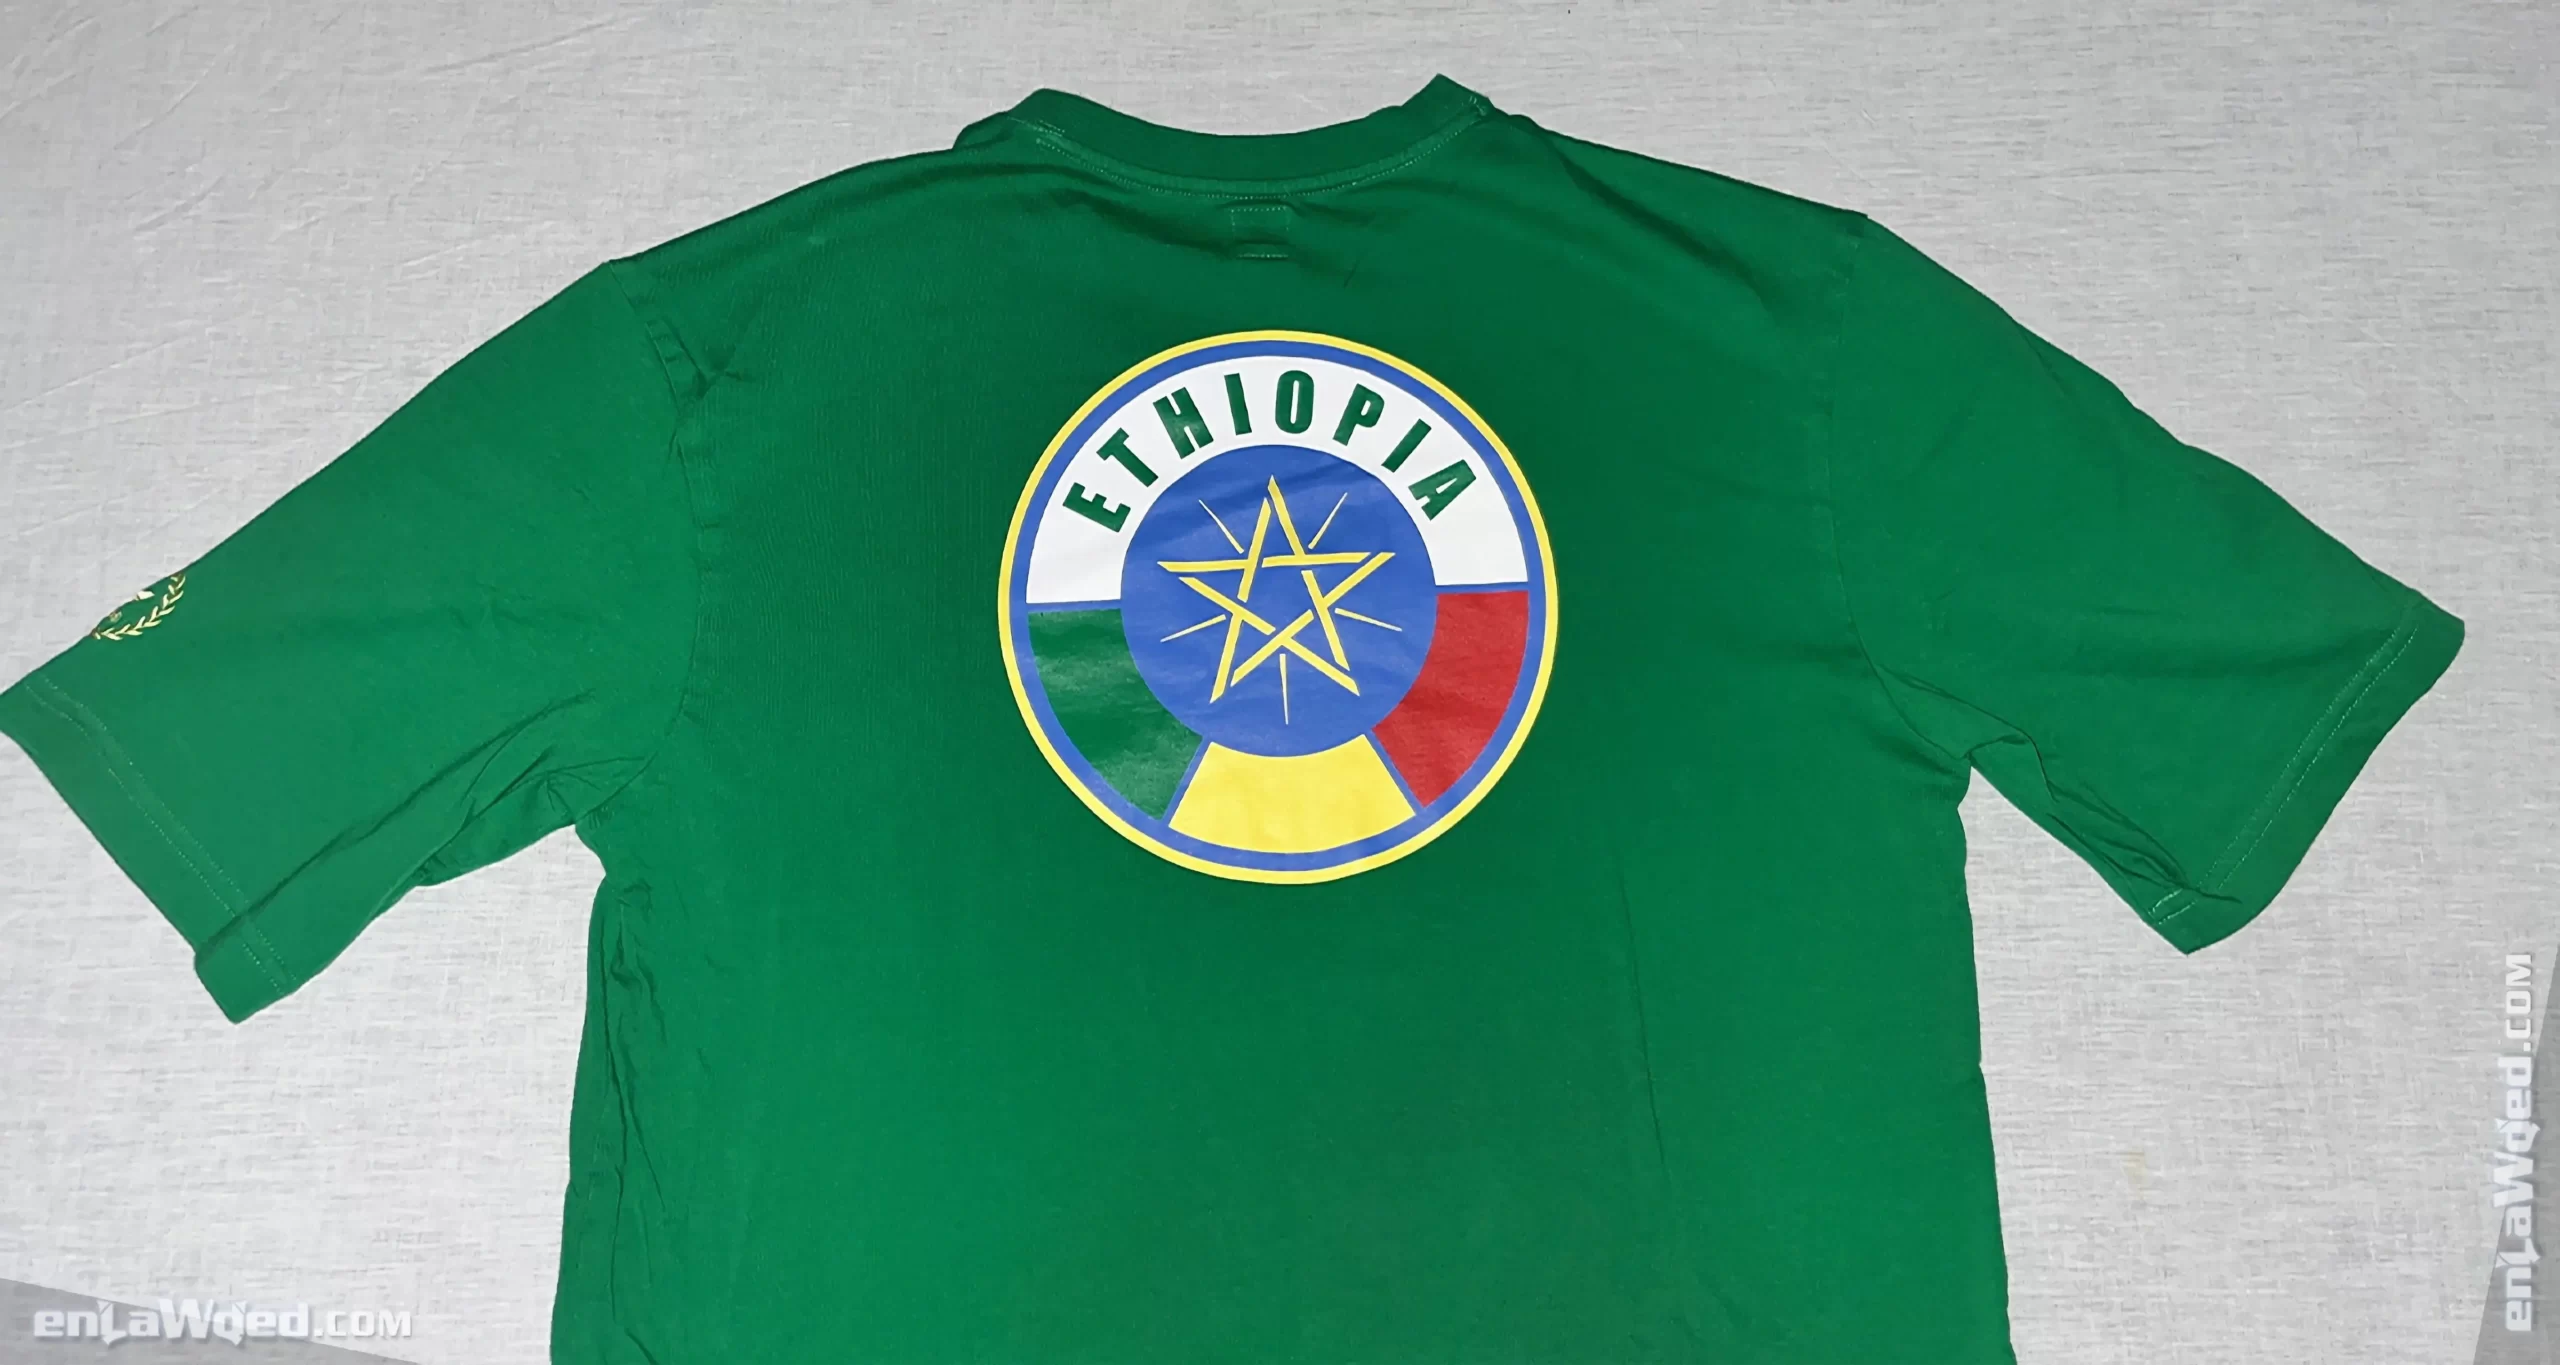 Men’s 2008 Ethiopia T-Shirt by Adidas Originals: Spontaneous (EnLawded.com file #lp1n9oyu126214niu50rhi03)